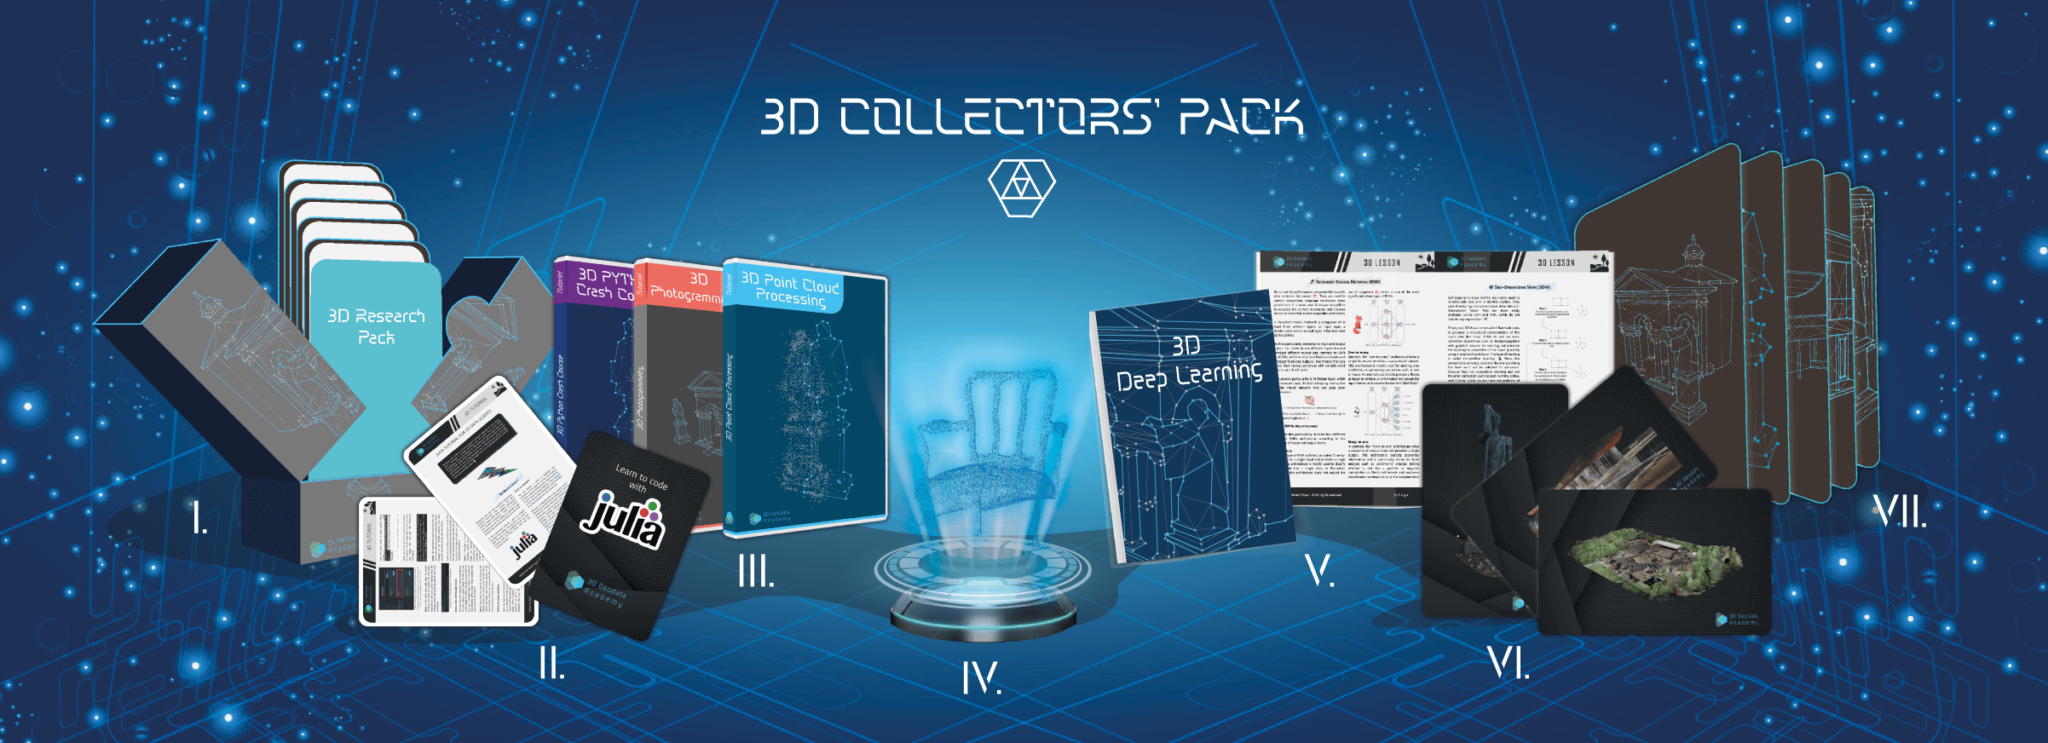 3D Online Courses: 3D Collector pack